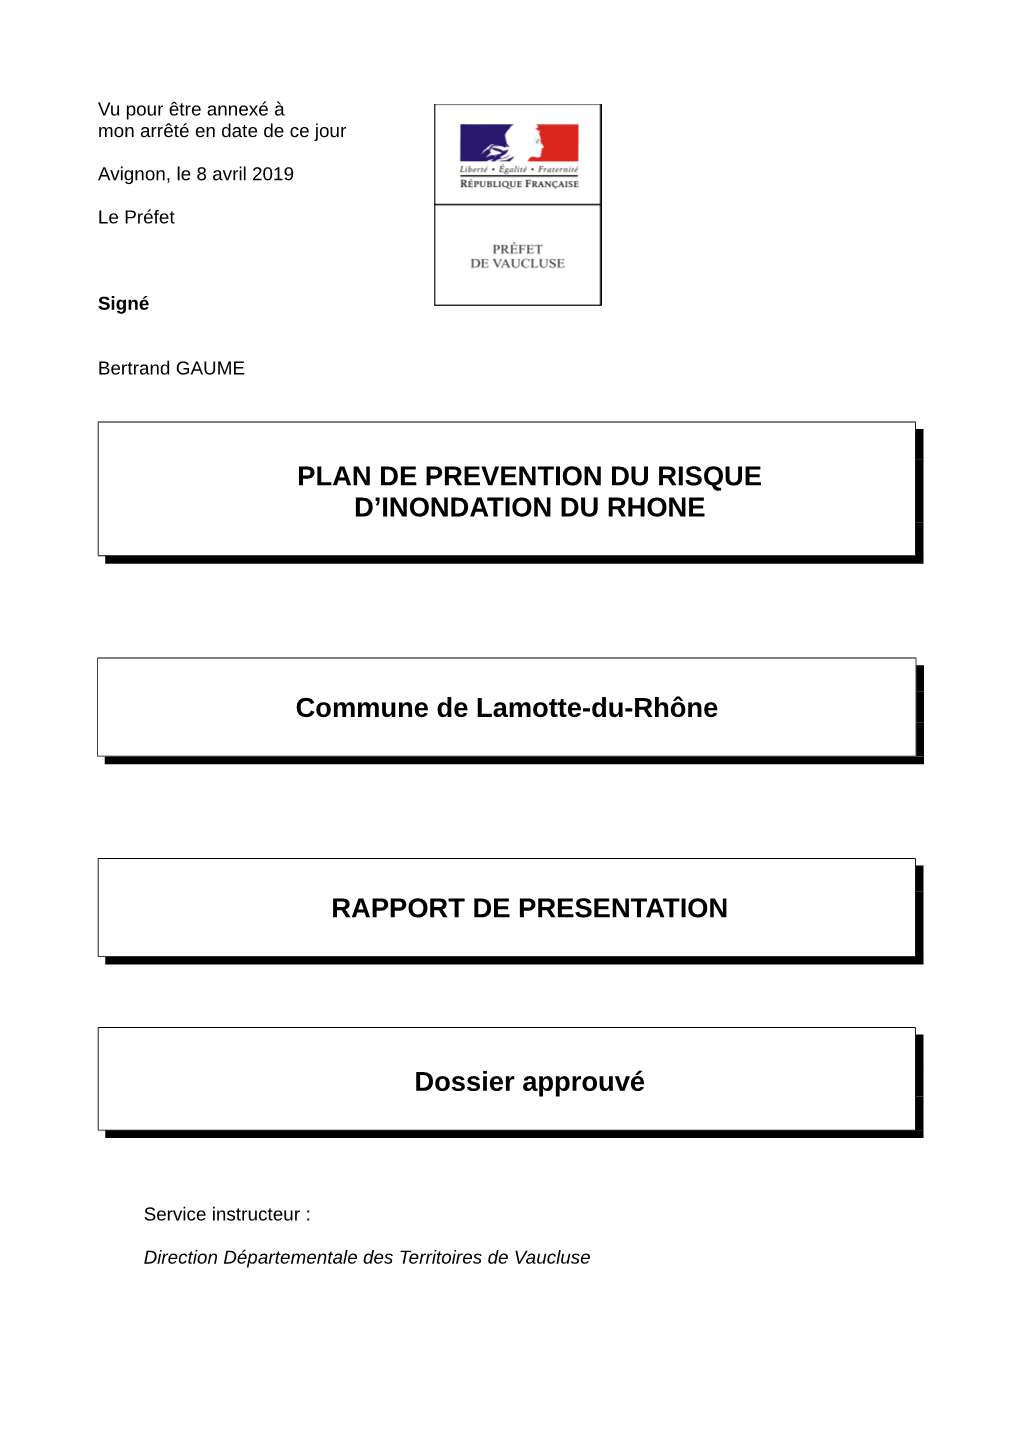 RP Lamotte-Du-Rhône